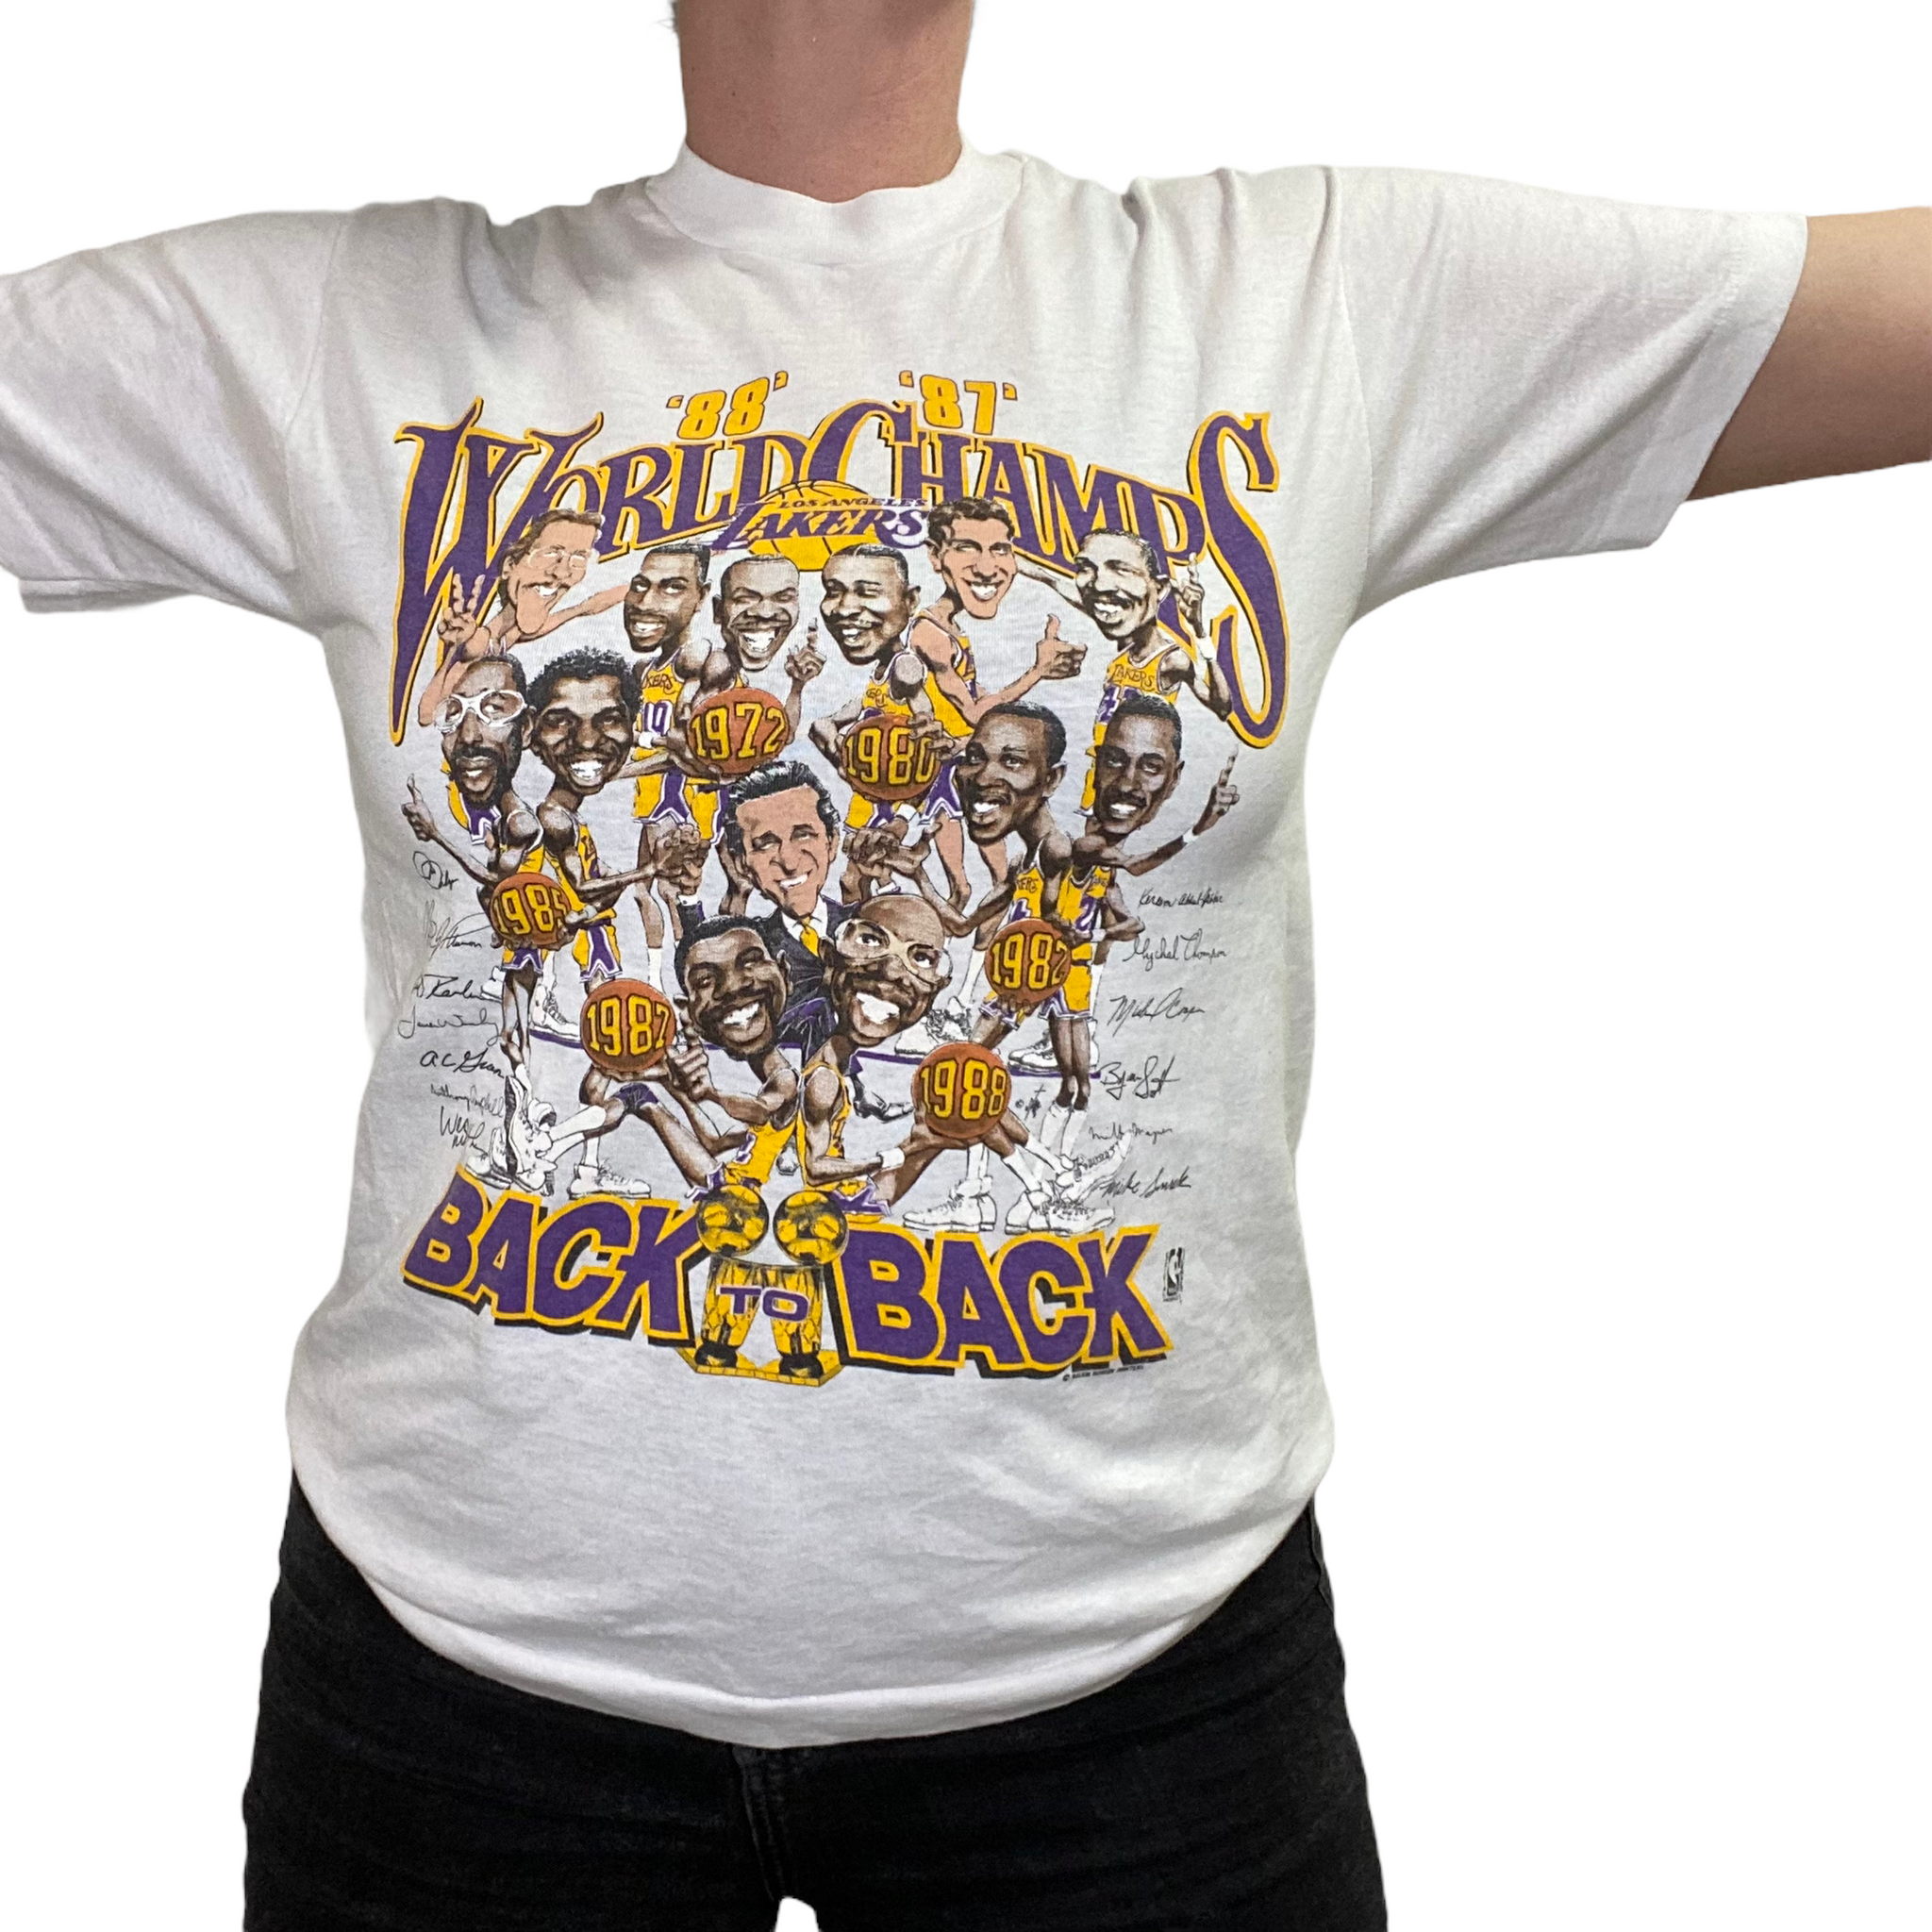 Vintage 1988 Los Angeles La Lakers Back to Back Champions Charicature Tshirt - Medium Available Medium